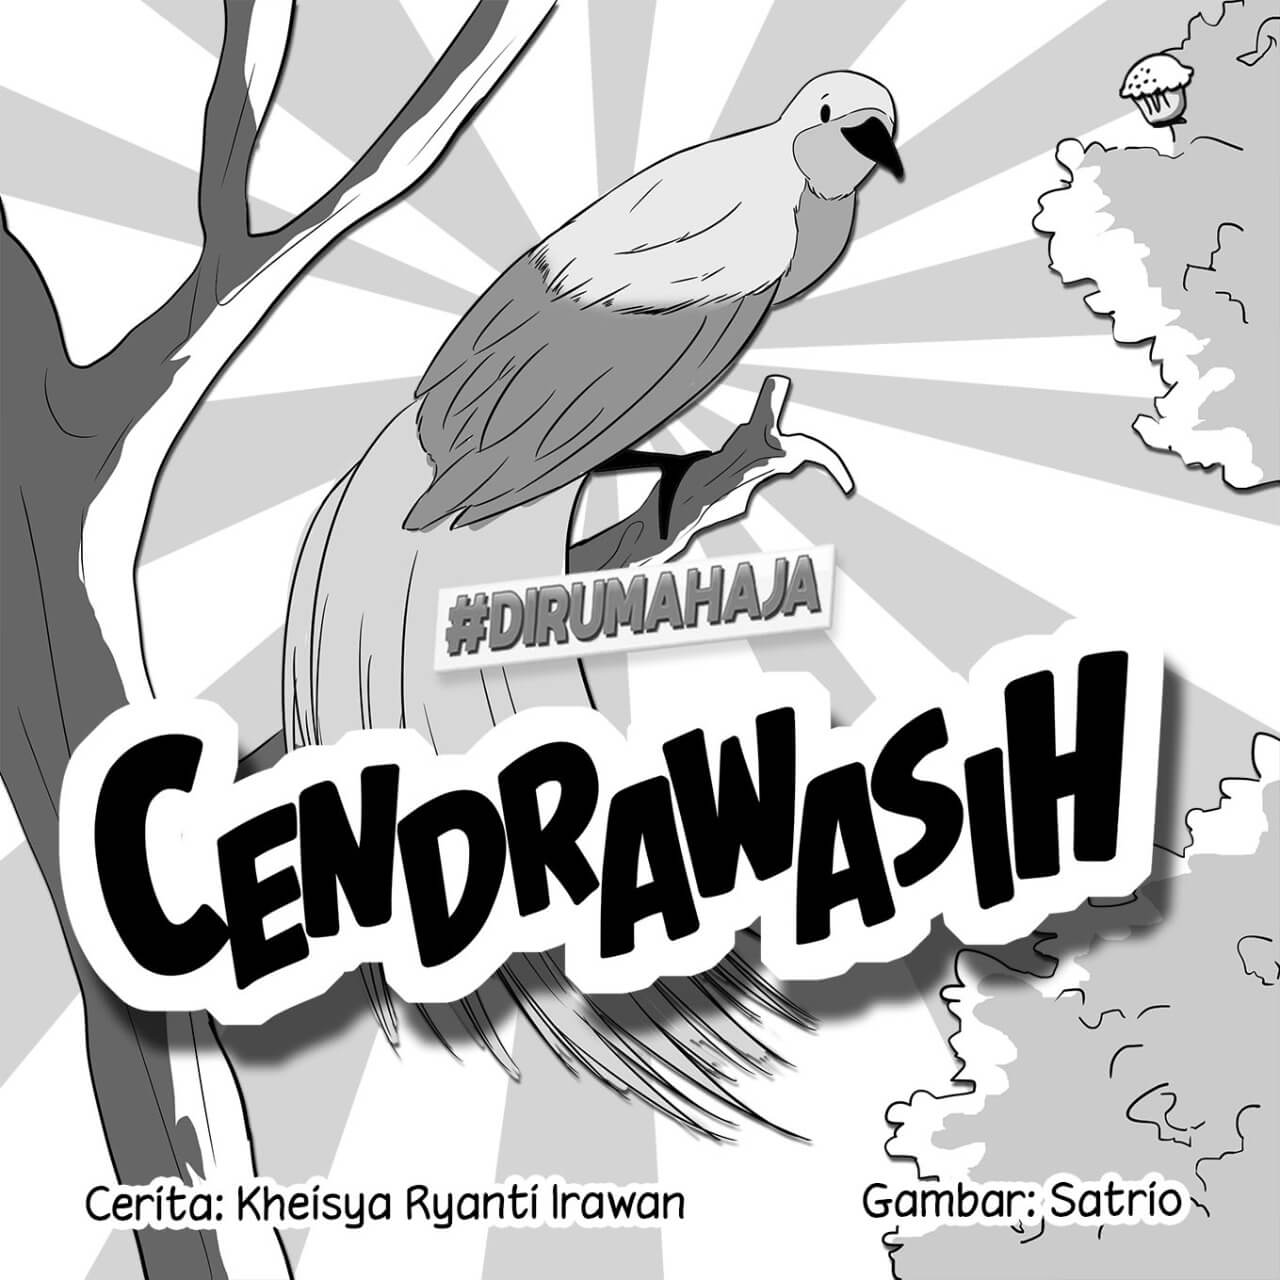 Cendrawasih cover bw